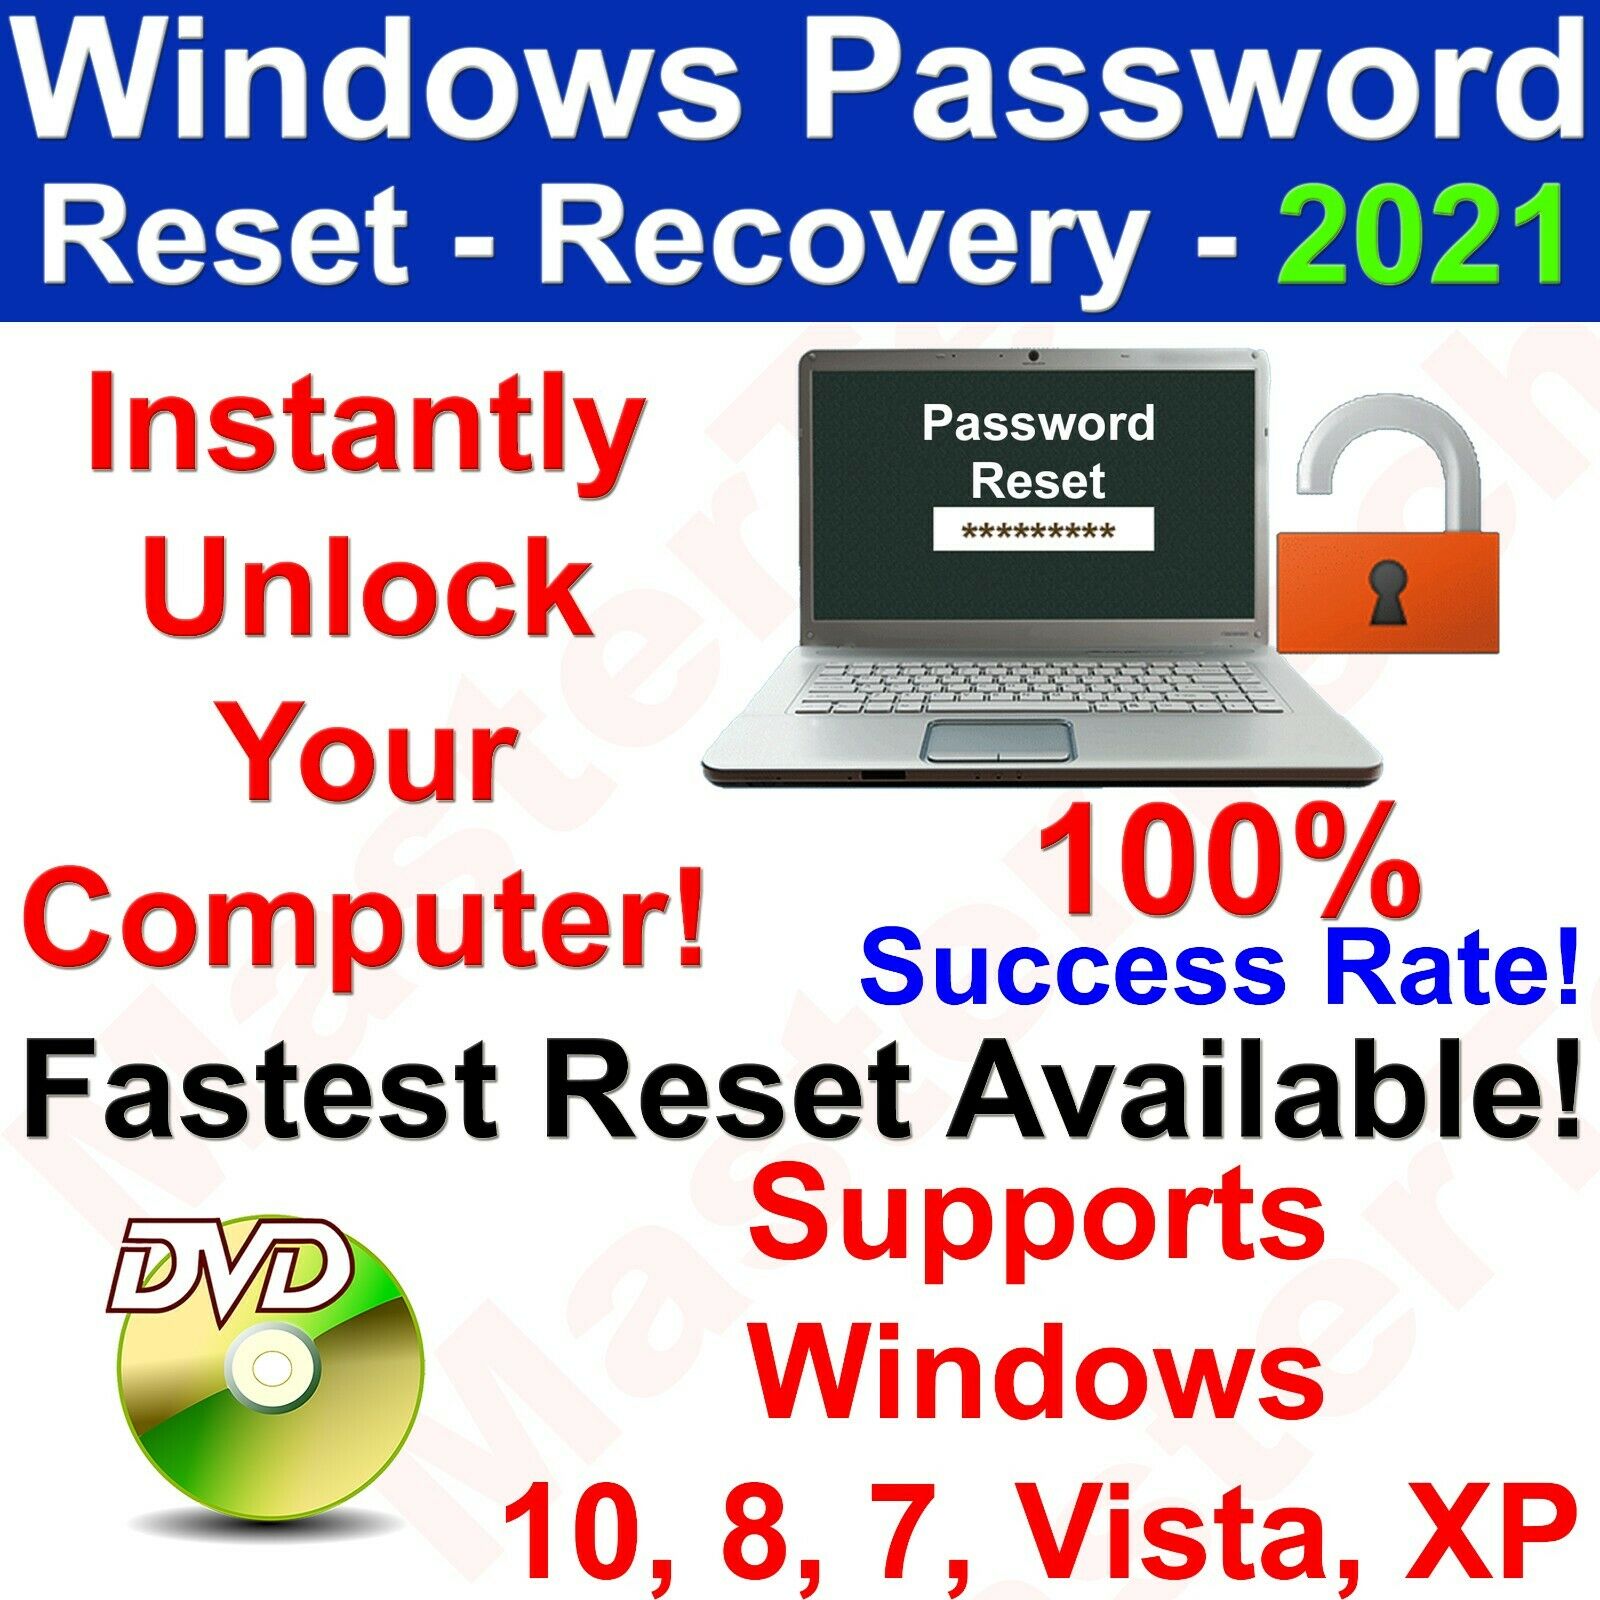 Windows Password Recovery Reset 2021 Dvd For Windows 10, 8, 7, Vista, Xp